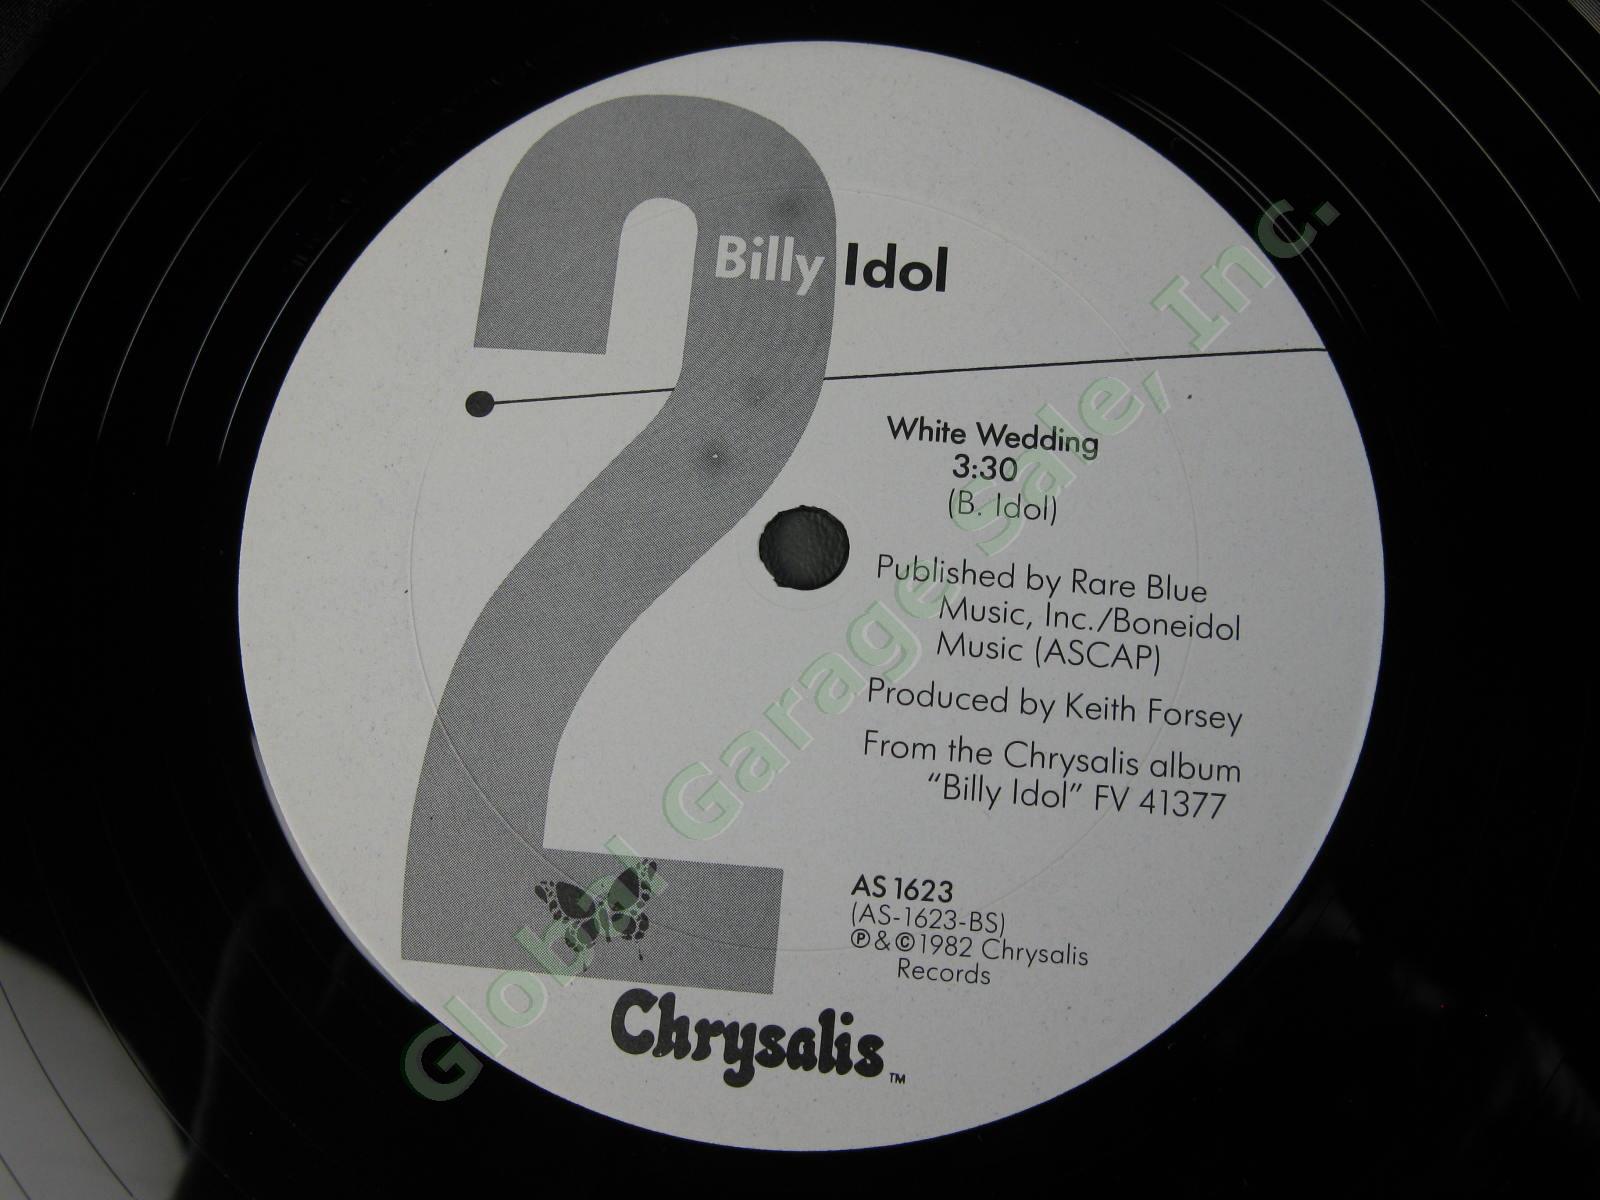 Billy Idol Signed 1982 White Wedding Single Promo 12 33 Record Chrysalis AS-1623 5